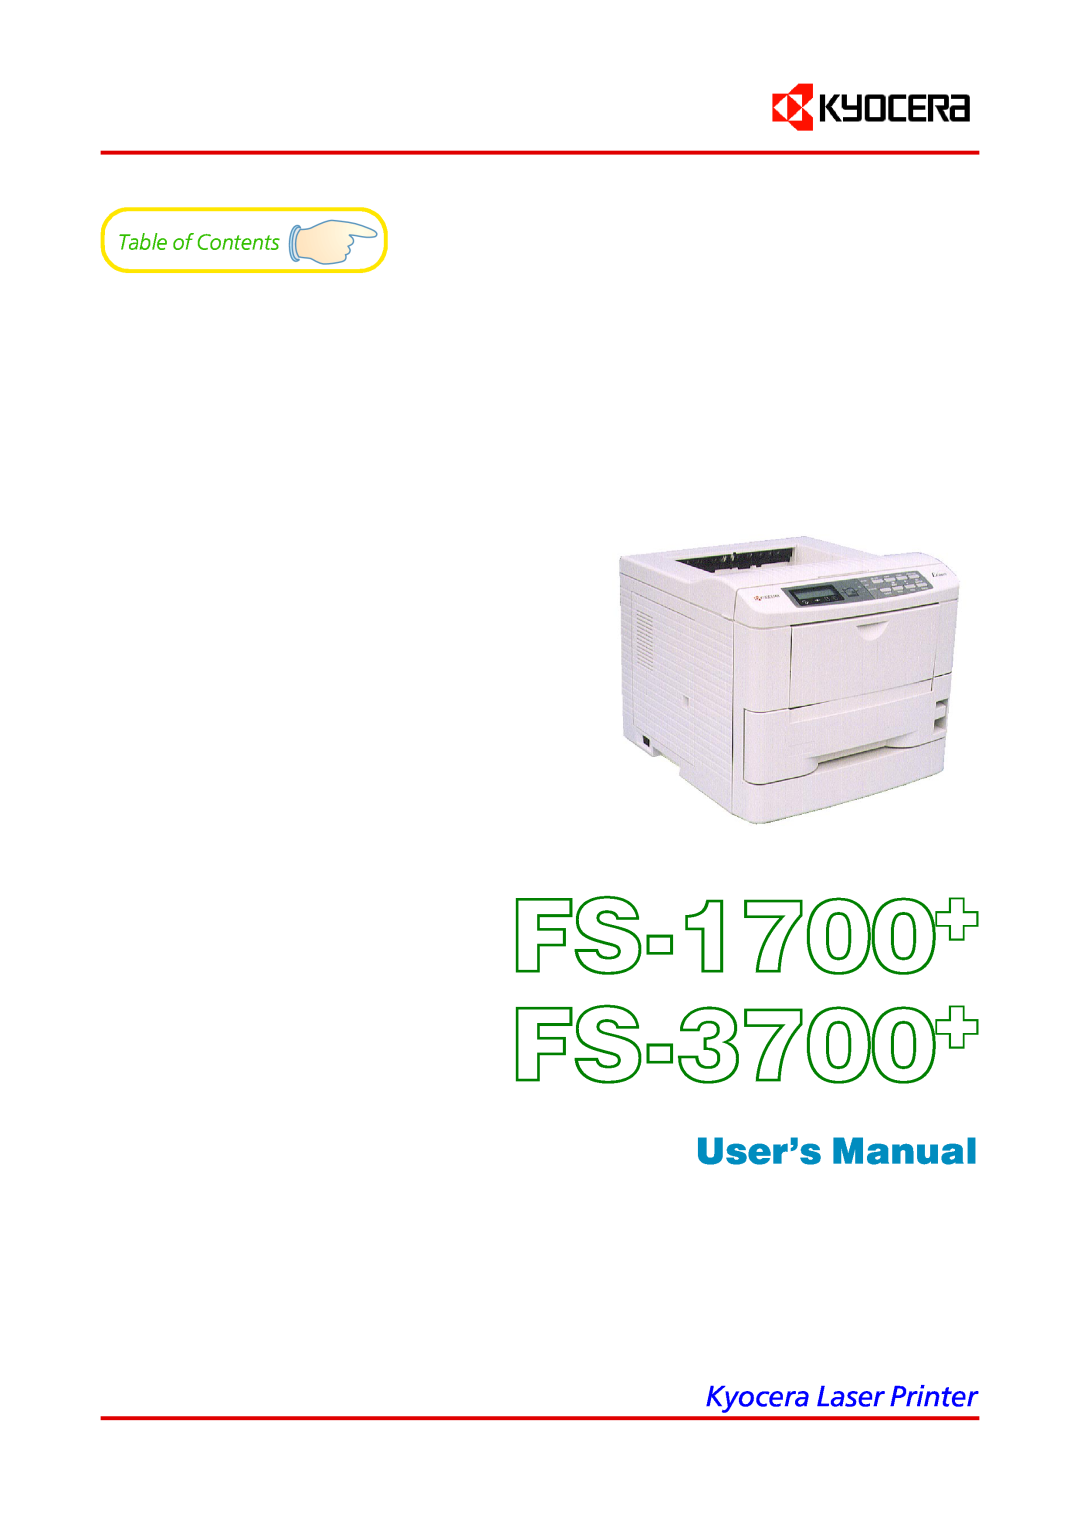 Kyocera user manual FS-1700 FS-3700, User’s Manual, Kyocera Laser Printer, Table of Contents 